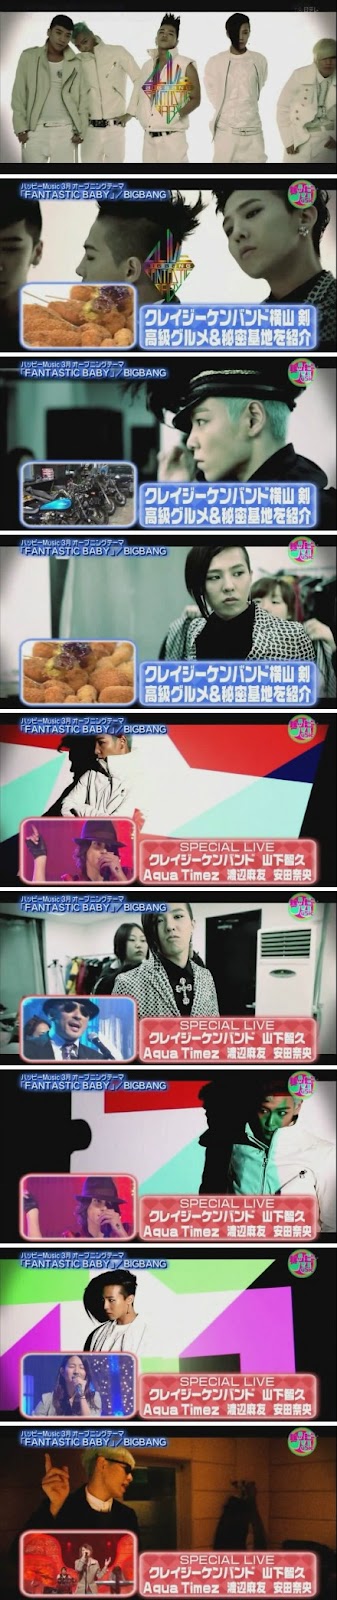 [Video] Opening de 30 seg. de "Fantastic Baby" en prog. japones, "Happy Music"  Japanese+MV